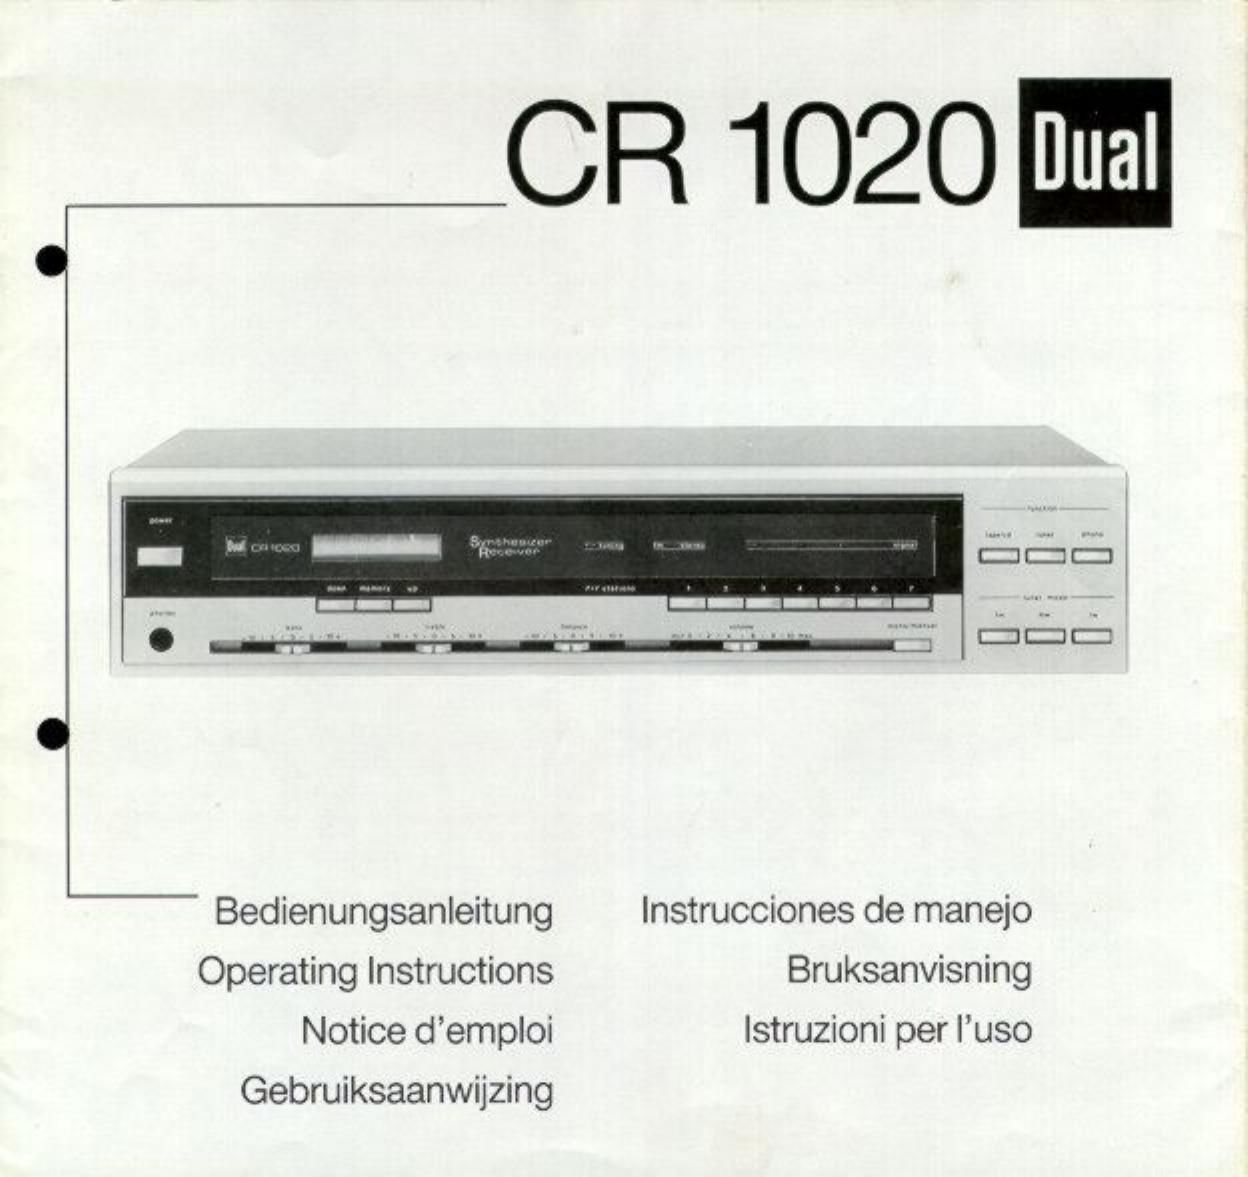 Dual CR 1020 Owners Manual